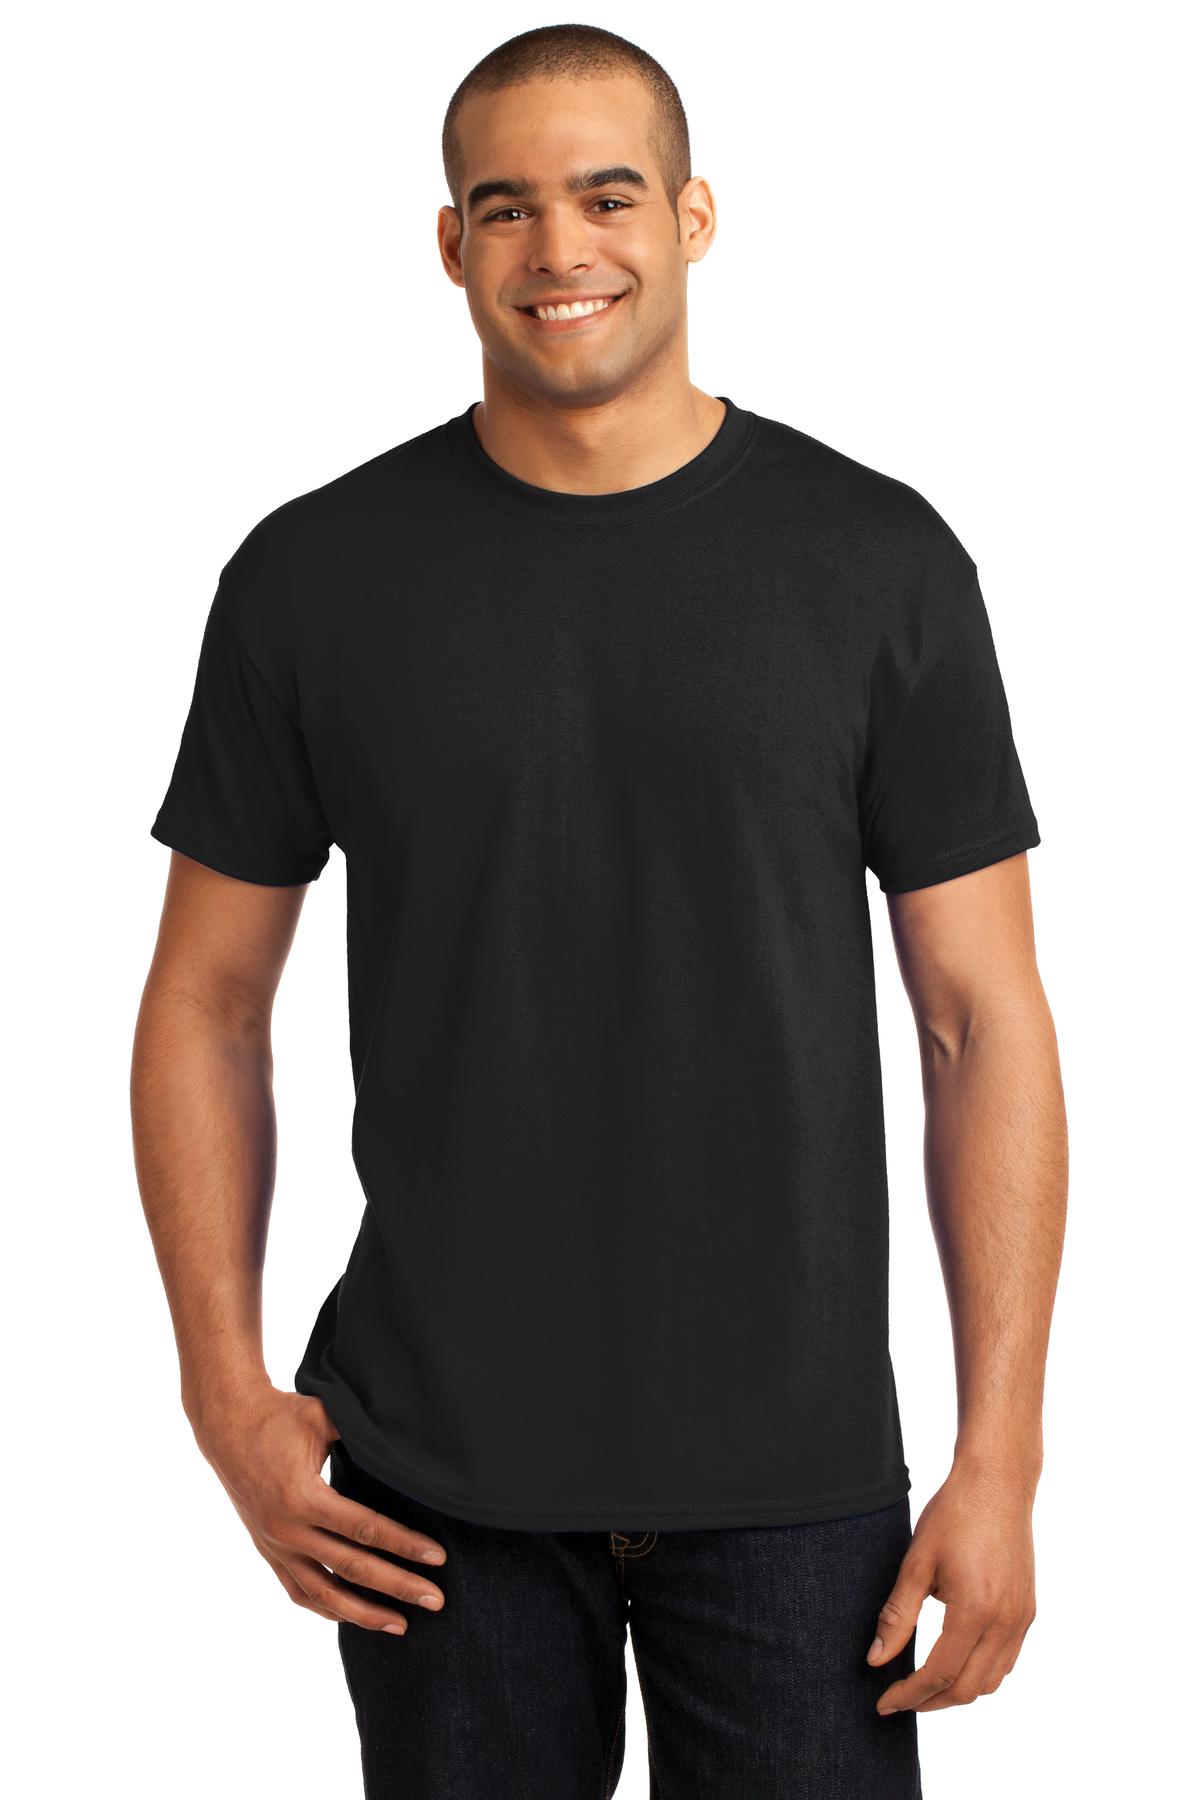 Hanes® - EcoSmart® 50/50 Cotton/Poly T-Shirt. 5170 [Black] - DFW Impression